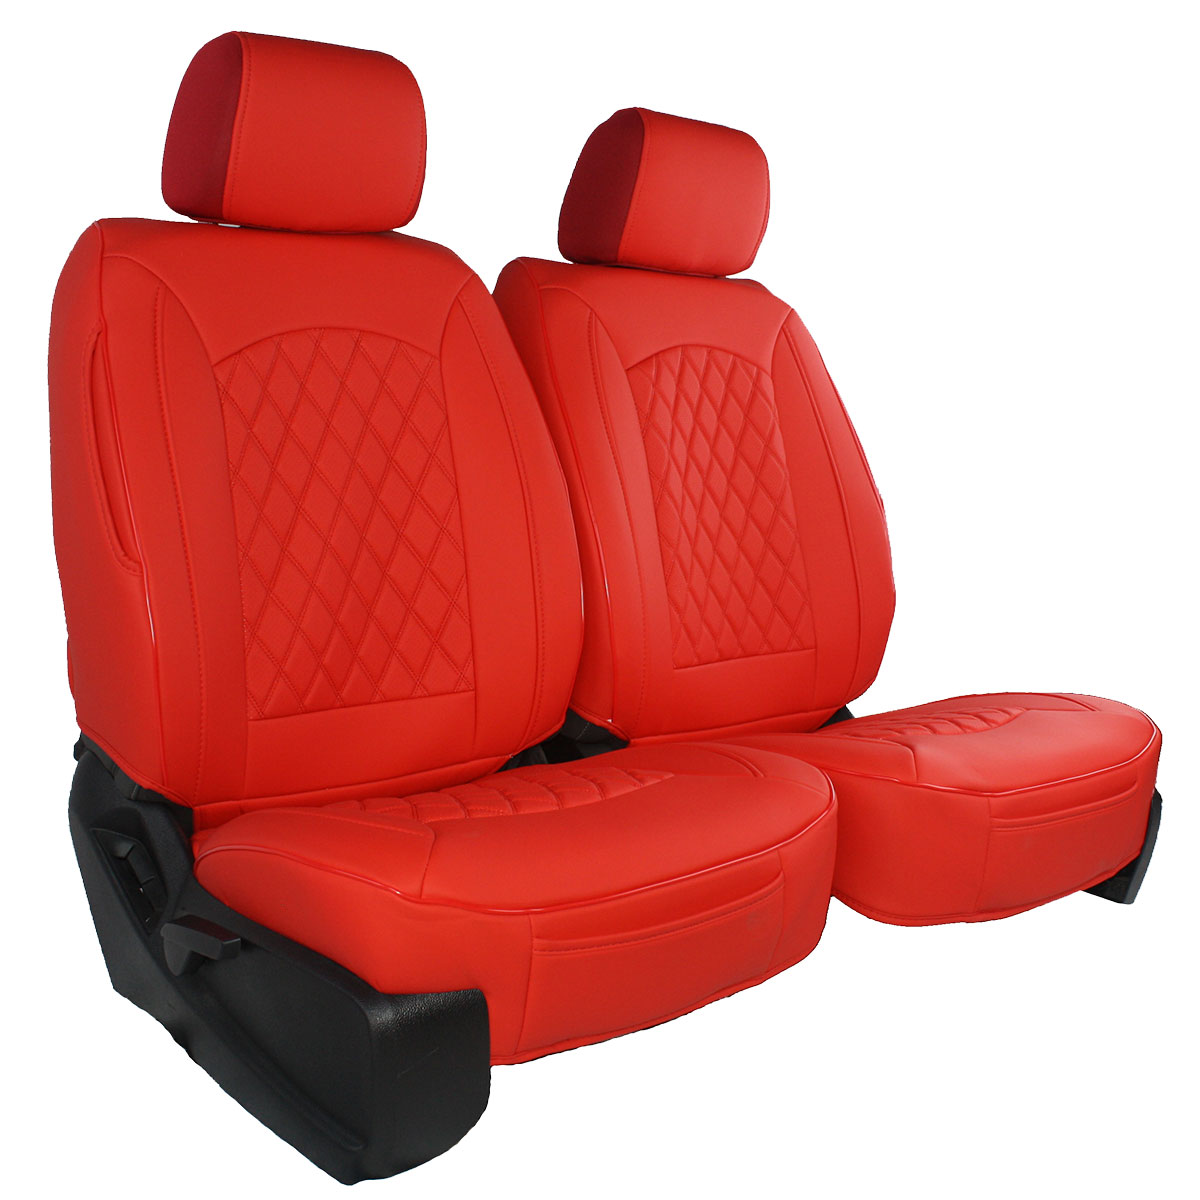 https://autohq.com/images/products/superlamb_semi-custom-leatherette-diamond-seat-cover_red.jpg